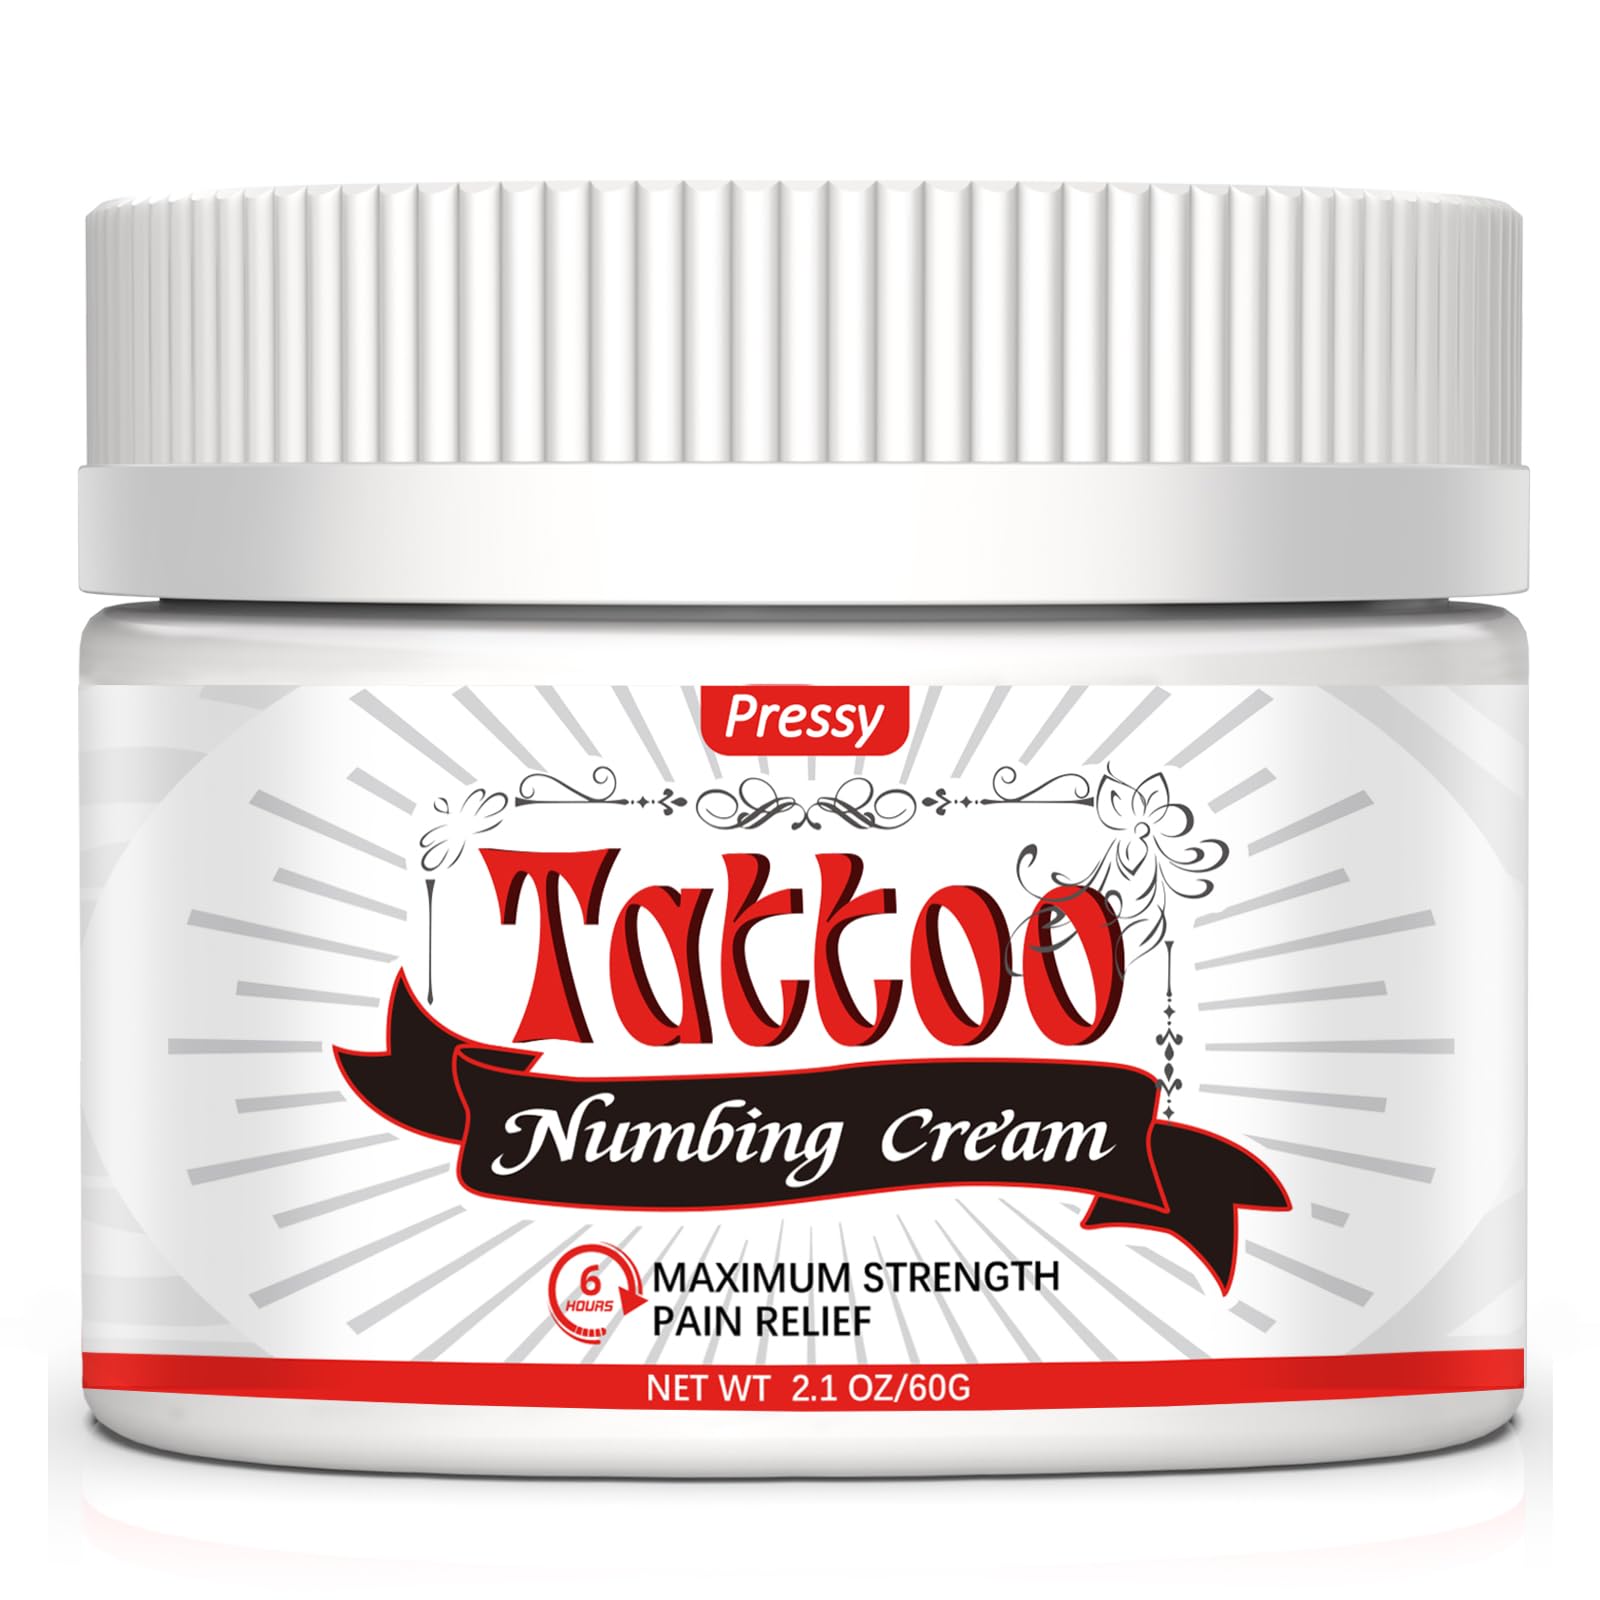 Tattoo Numbing Cream By Pressy - 2 oz.